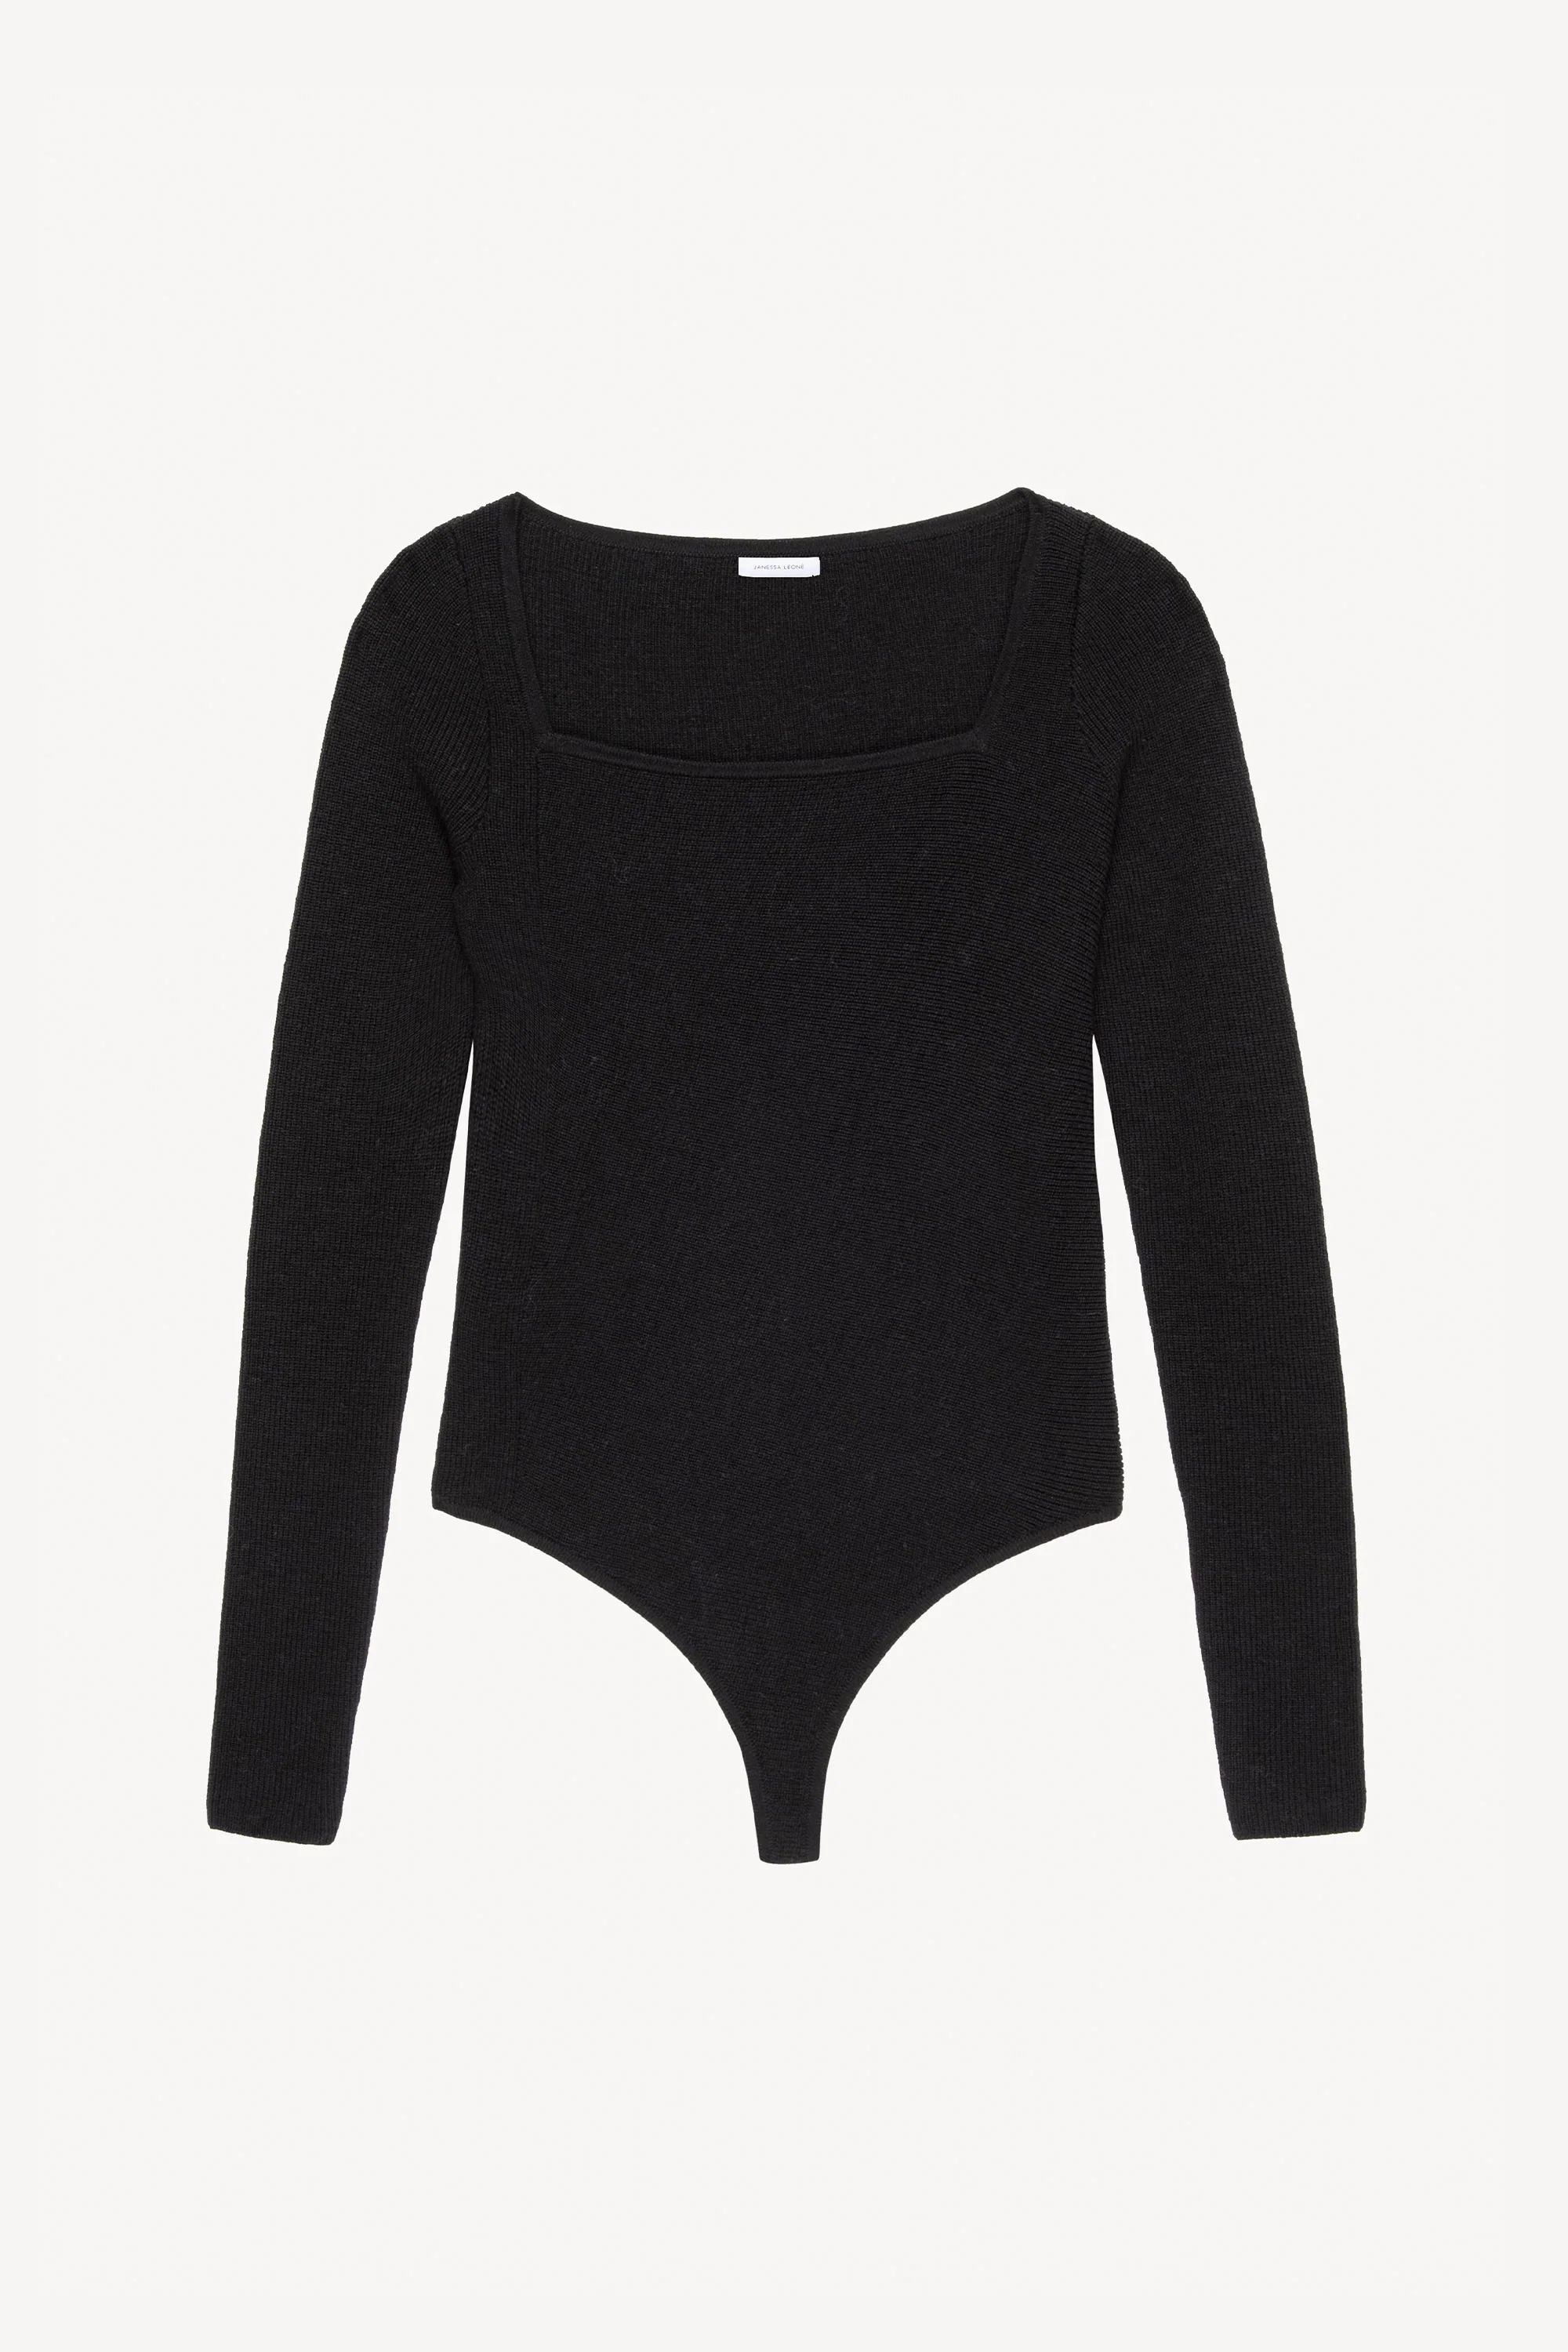 Noe Sweater | Janessa Leone